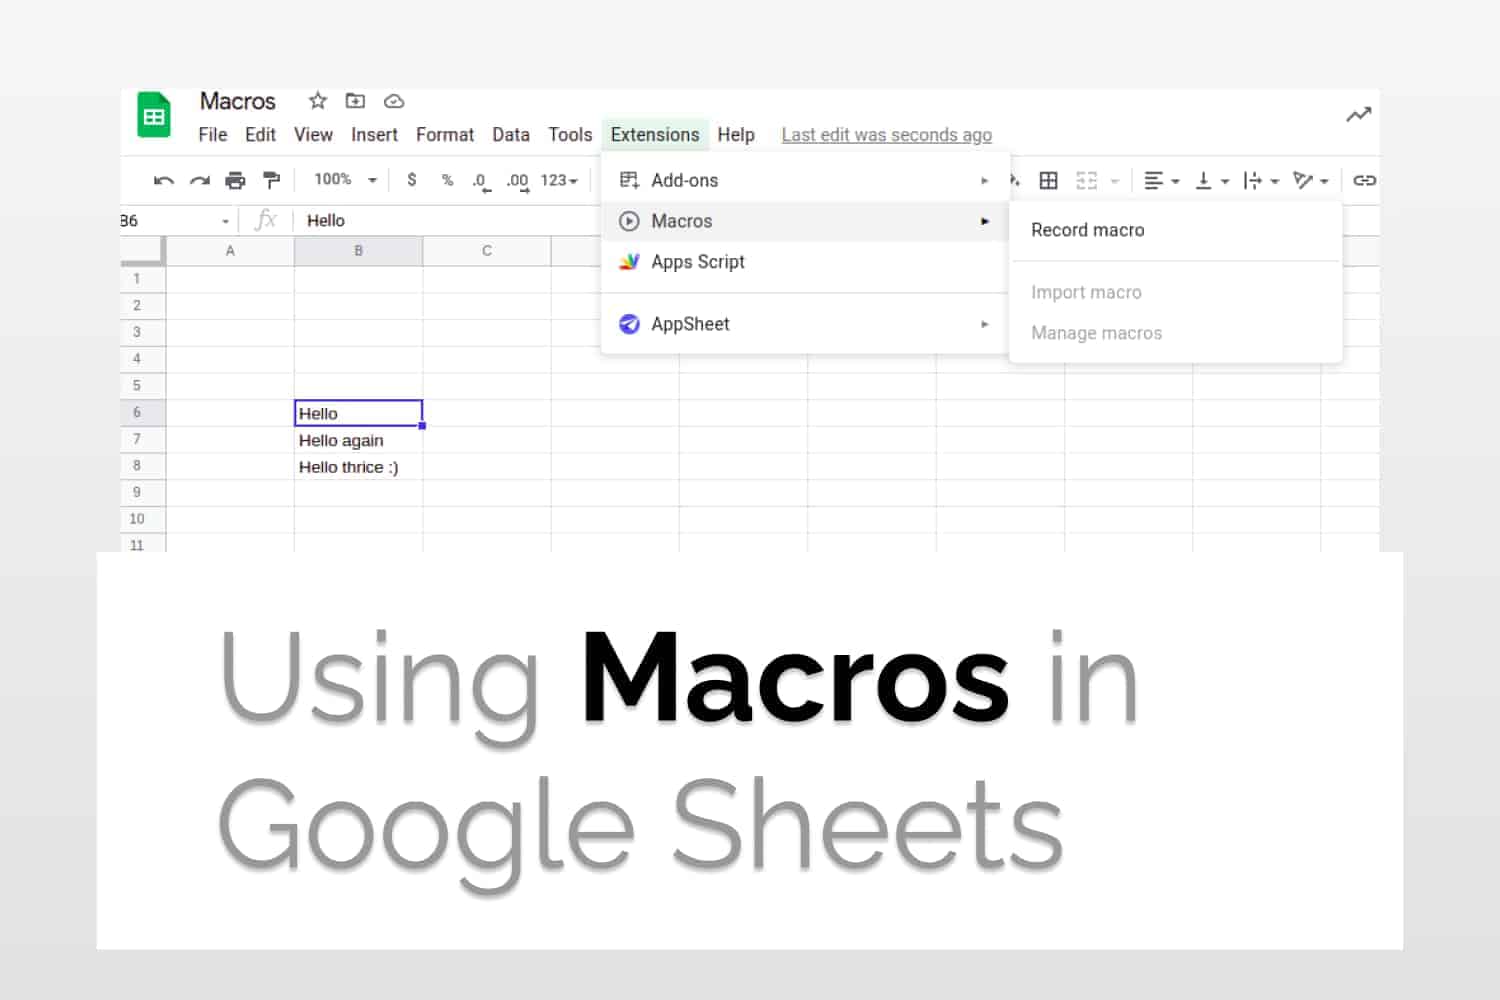 Macros in Google Sheets